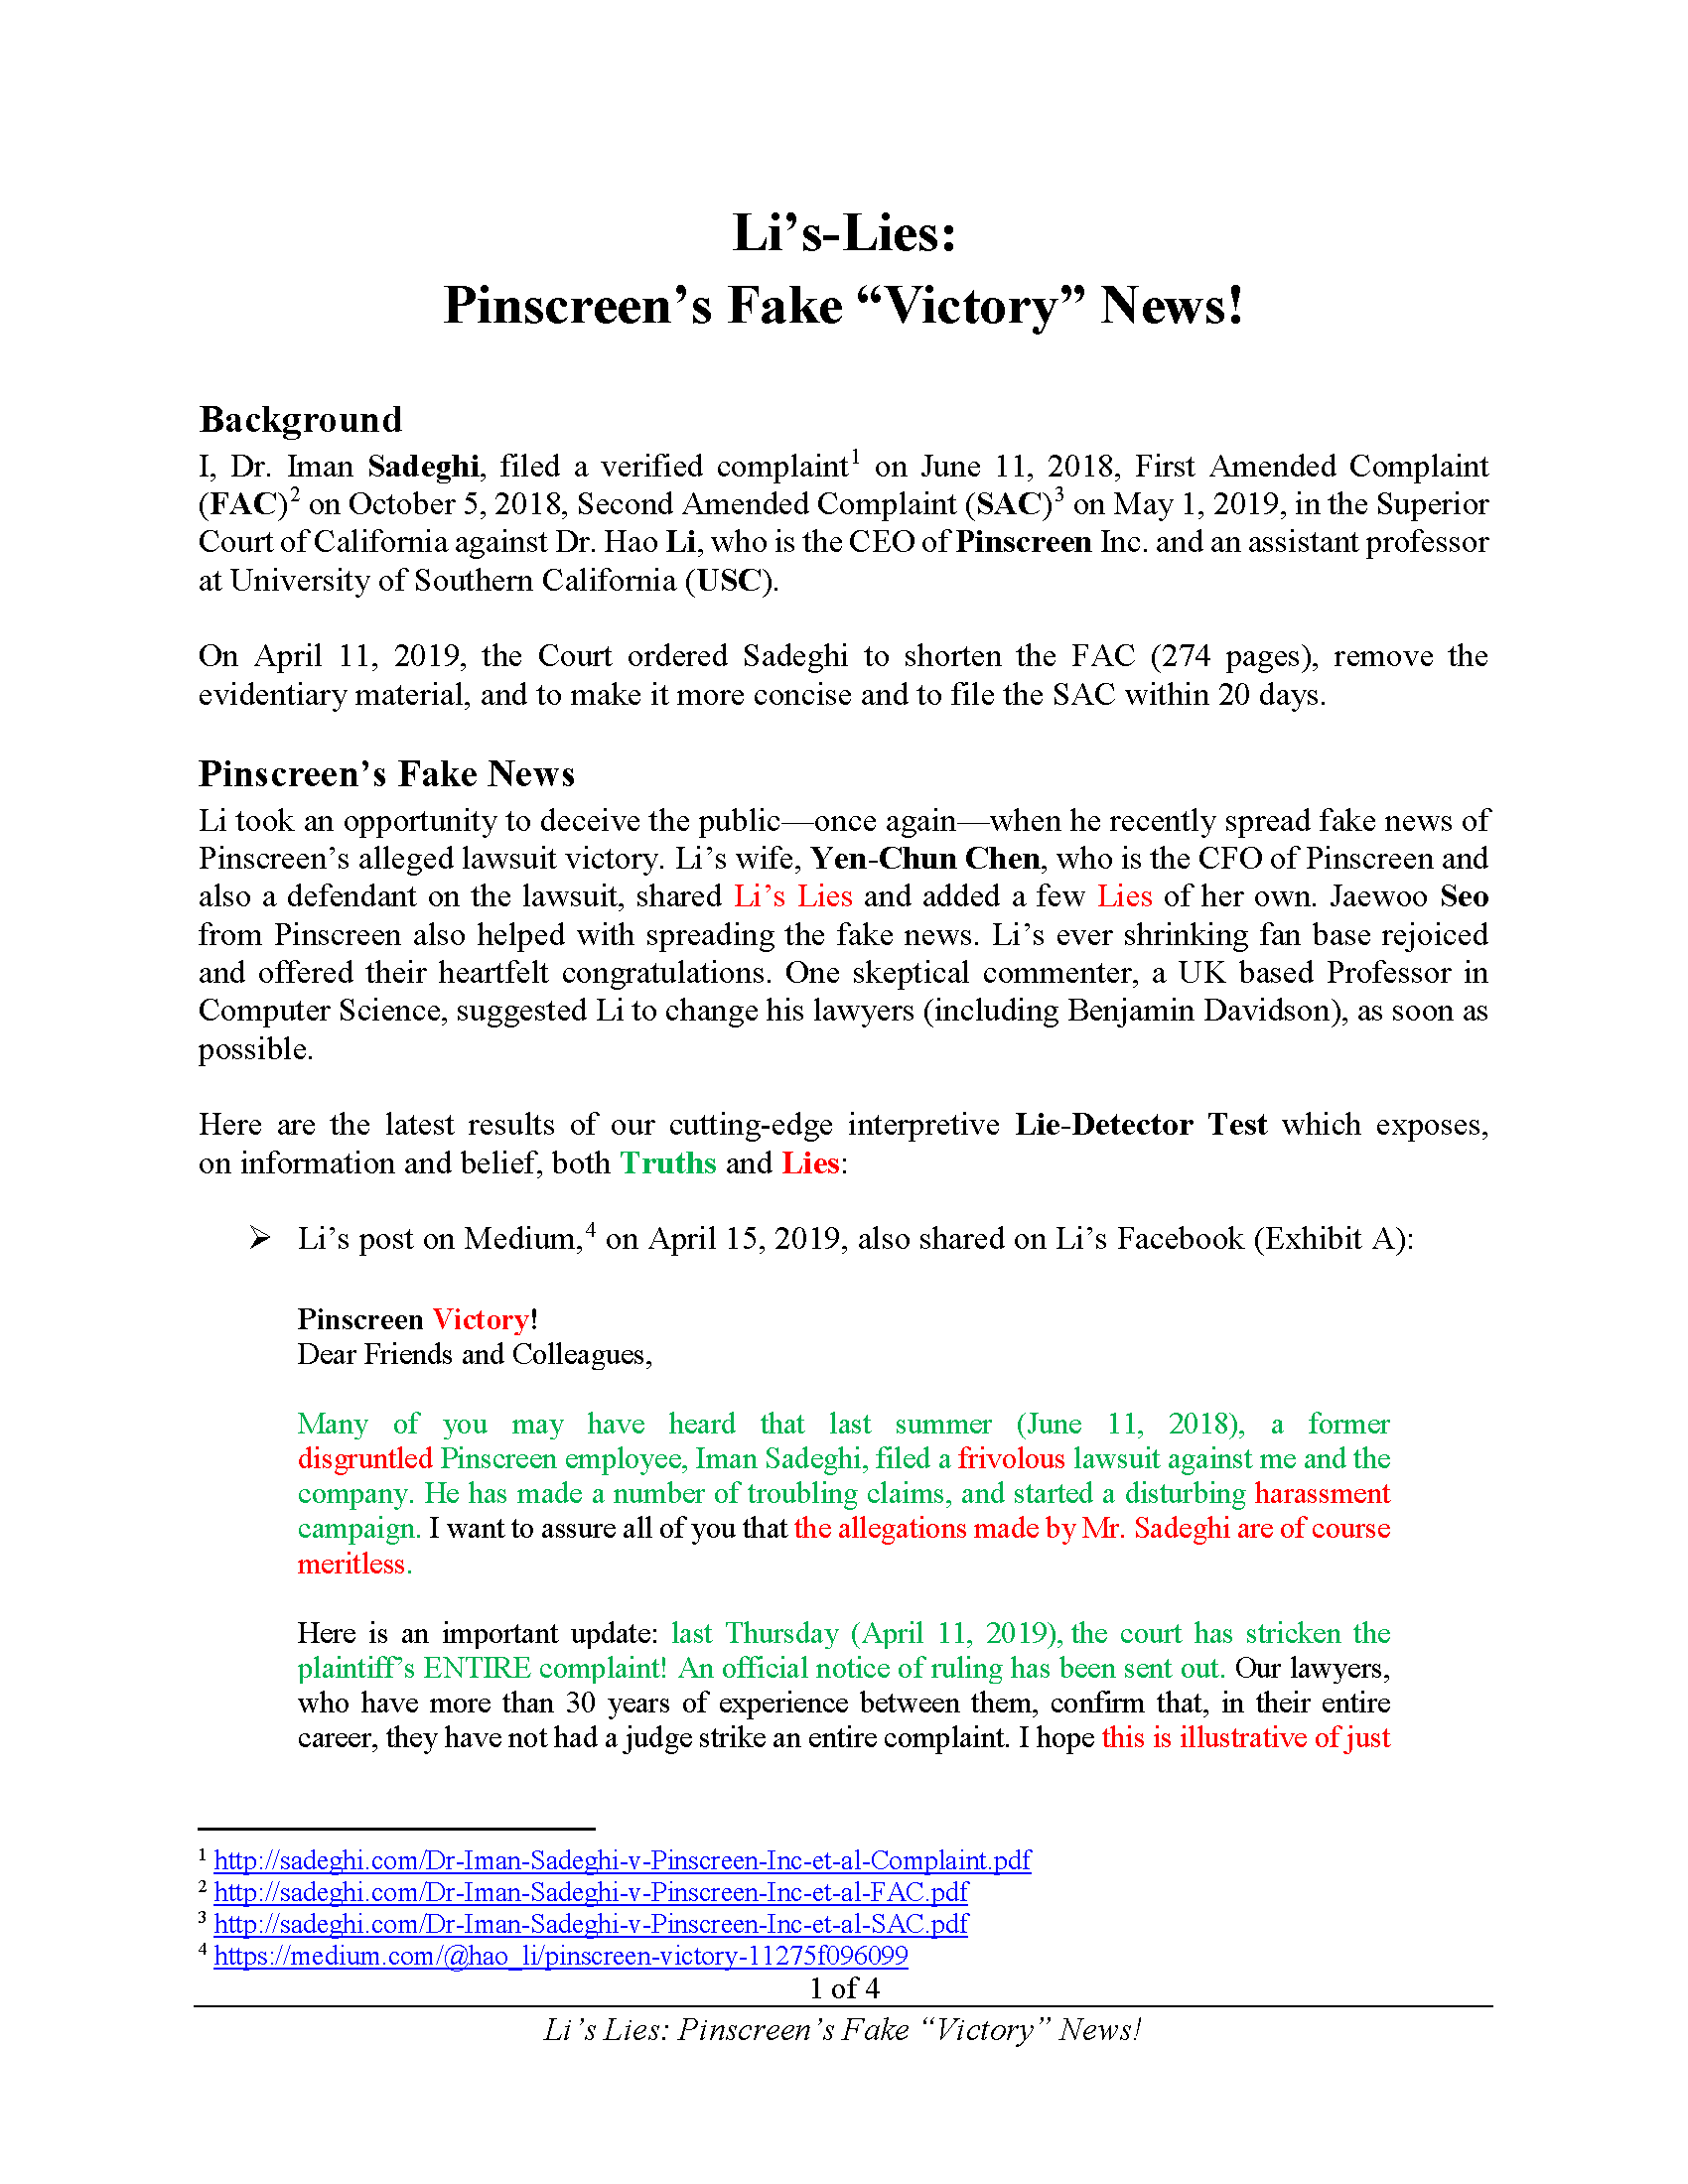 Pinscreen's Fake 'Victory' News! Page 1